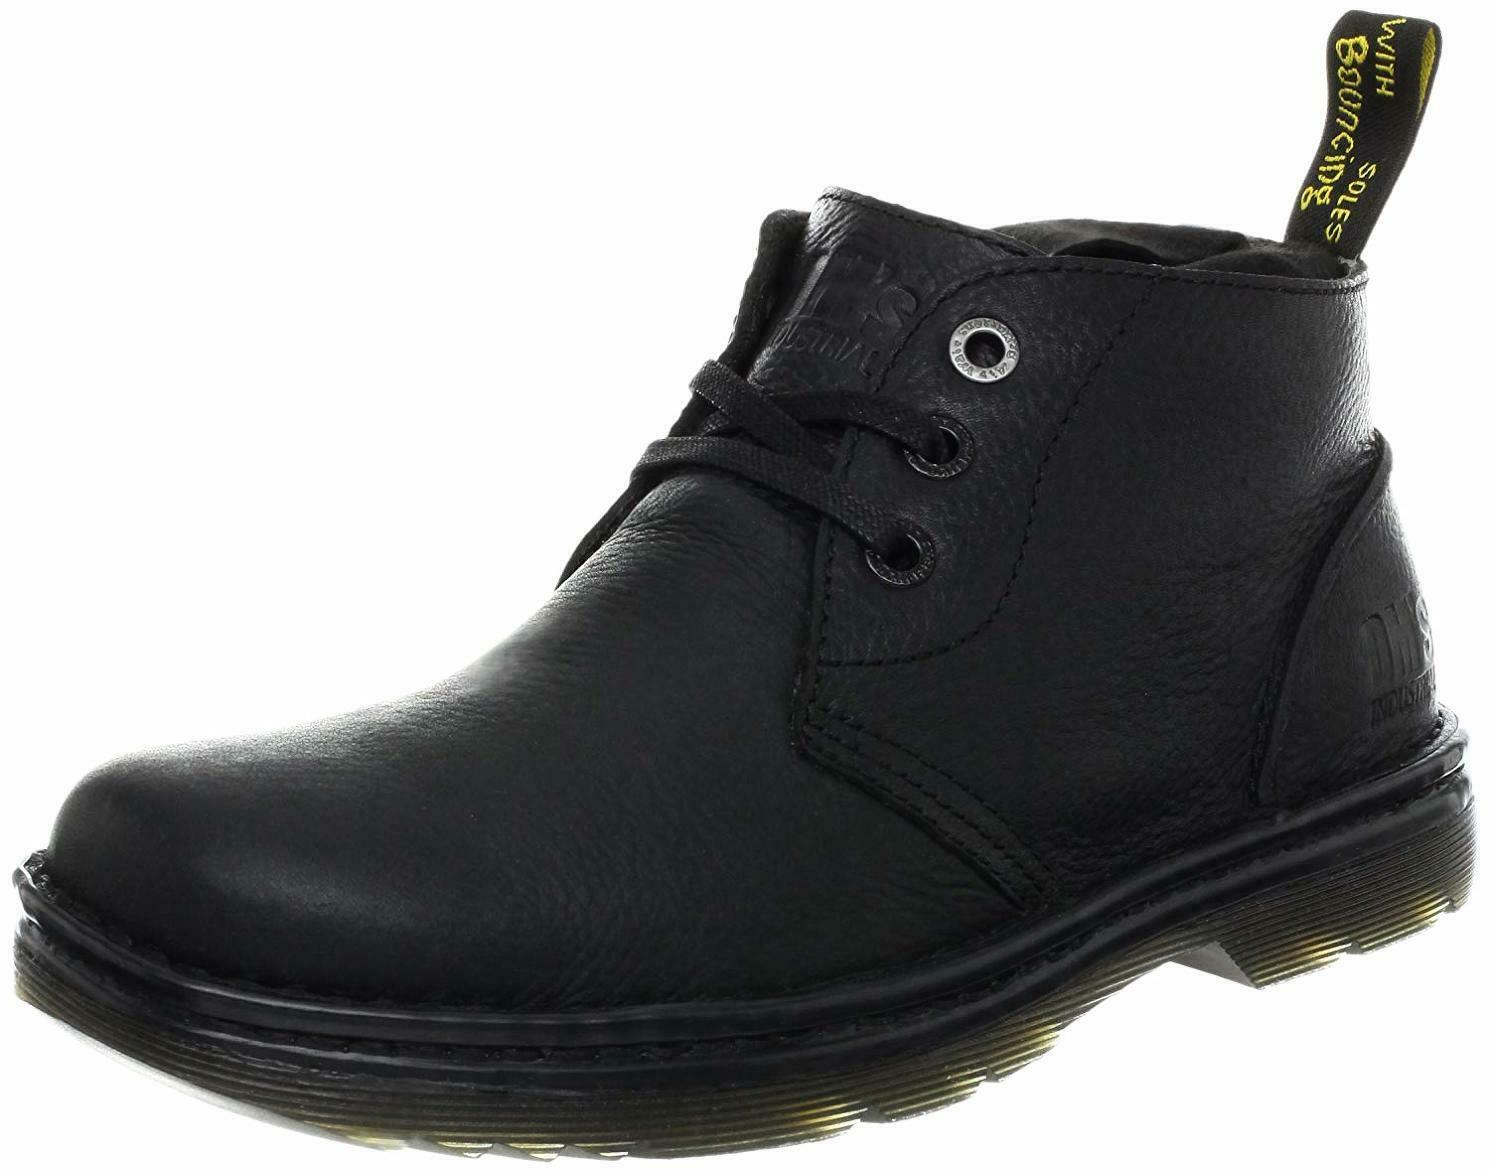 Dr. Martens Men's Sussex Work Boot - Choose SZ/Color - $105.51 - $152.42